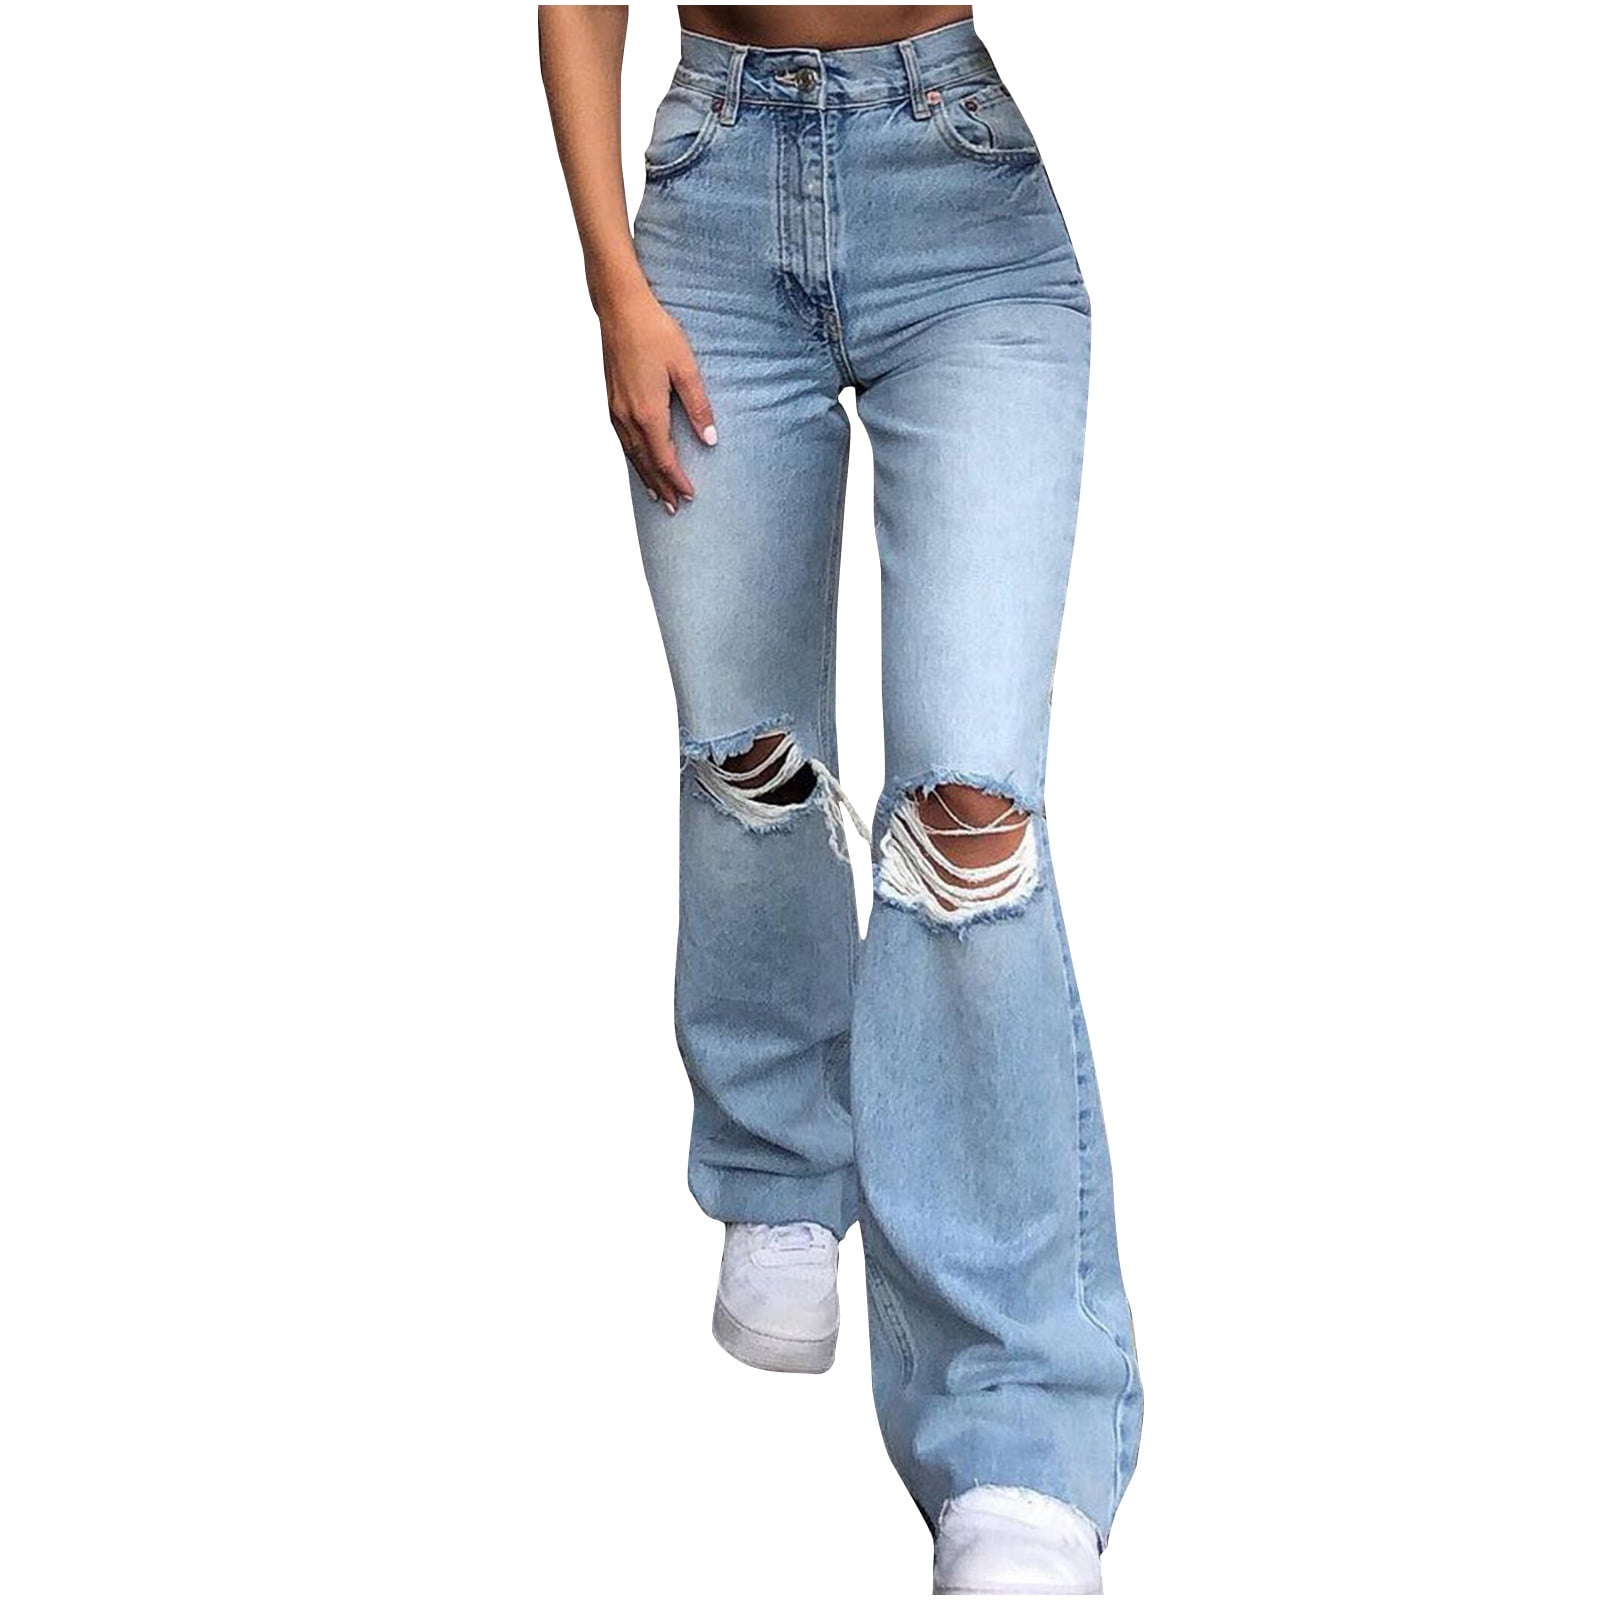 S-5XL Women Jeans Rhinestone Elastic Pencil Slim Skinny Spring